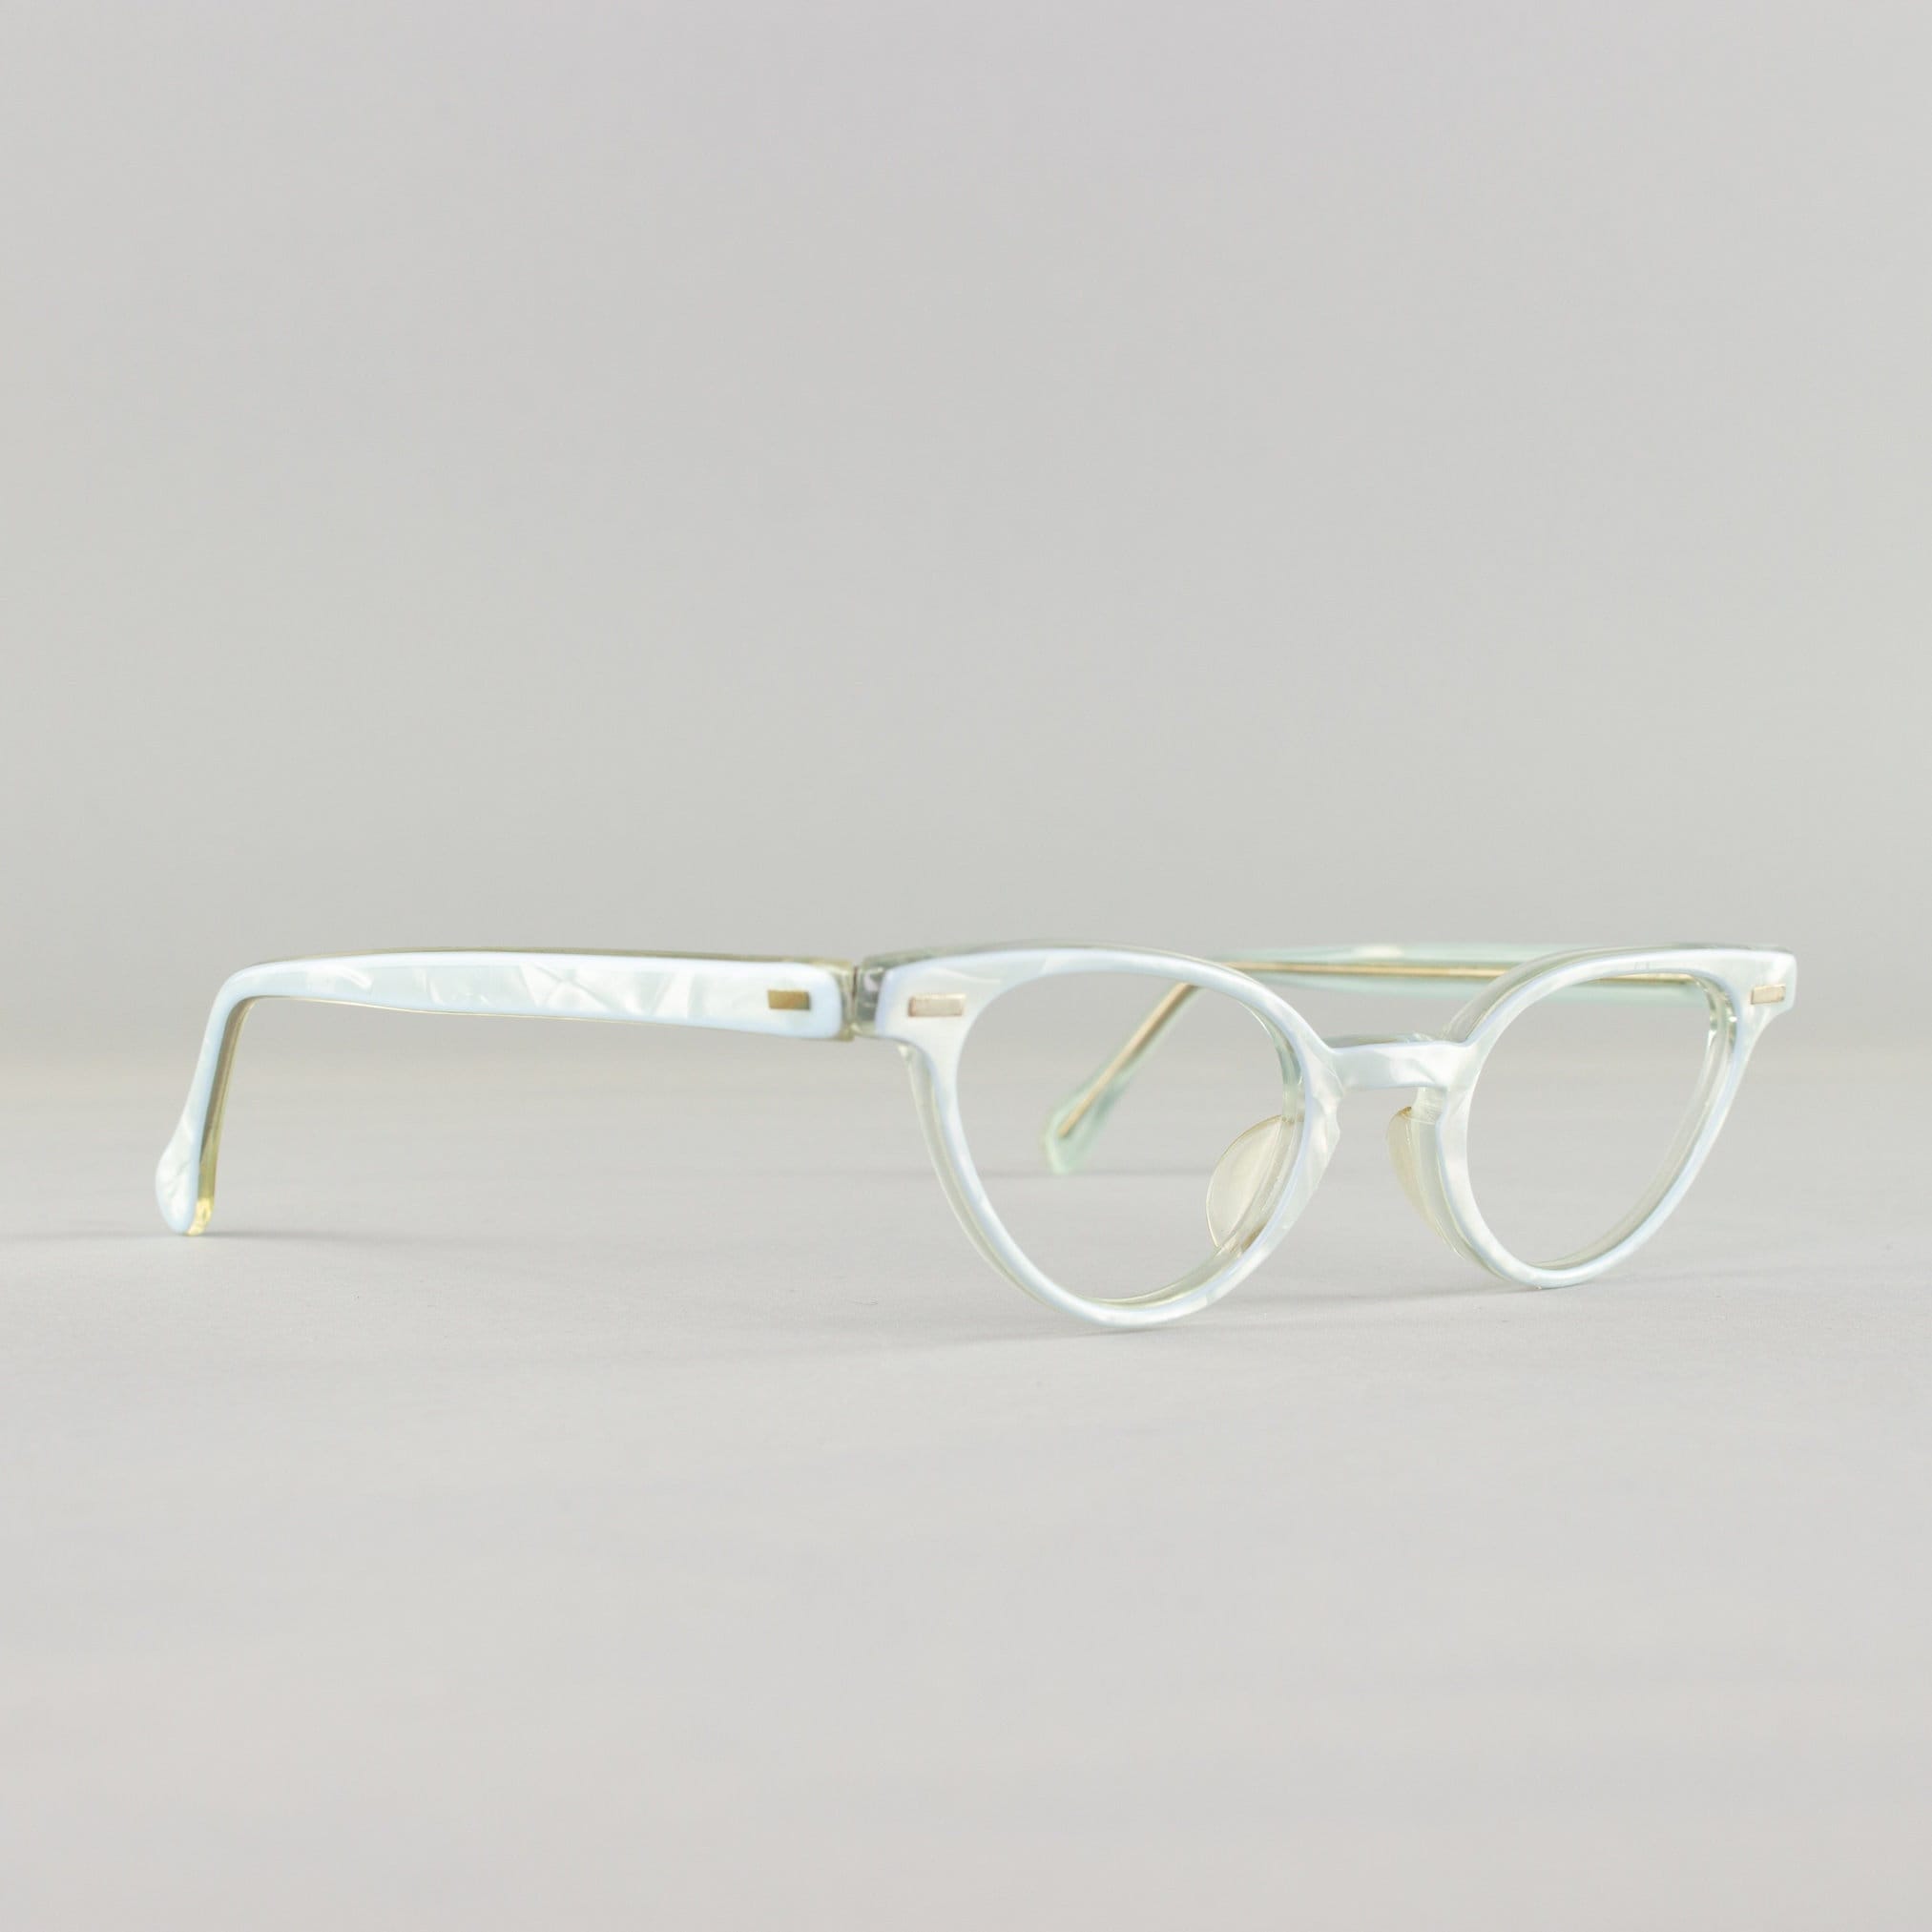 Vintage Eyeglasses 60s Cateye Glasses Frames Baby Blue 